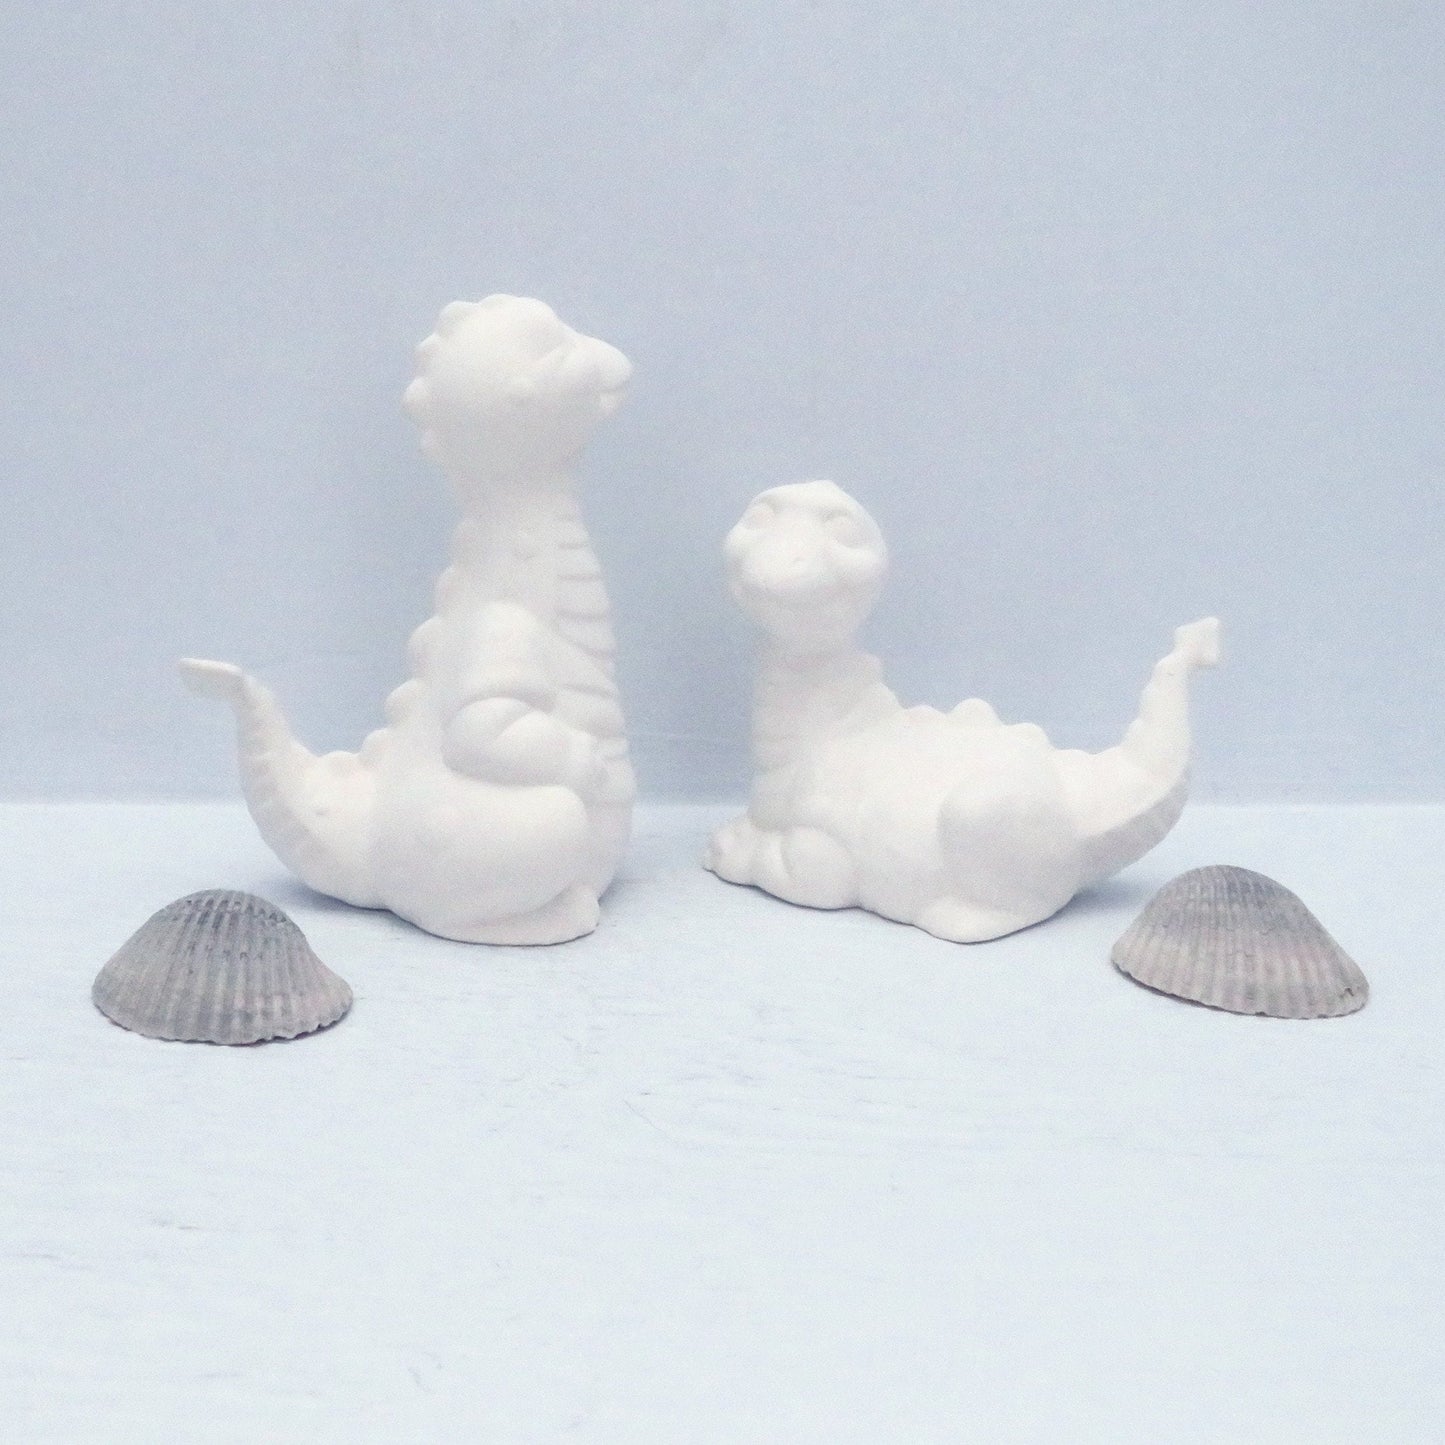 Unpainted Ceramic Bisque Dinosaur Set / Paintable Dinosaur Figurines / Ready to Paint Dinosaur Statues / Dinosaur Gift / Dinosaur Decor